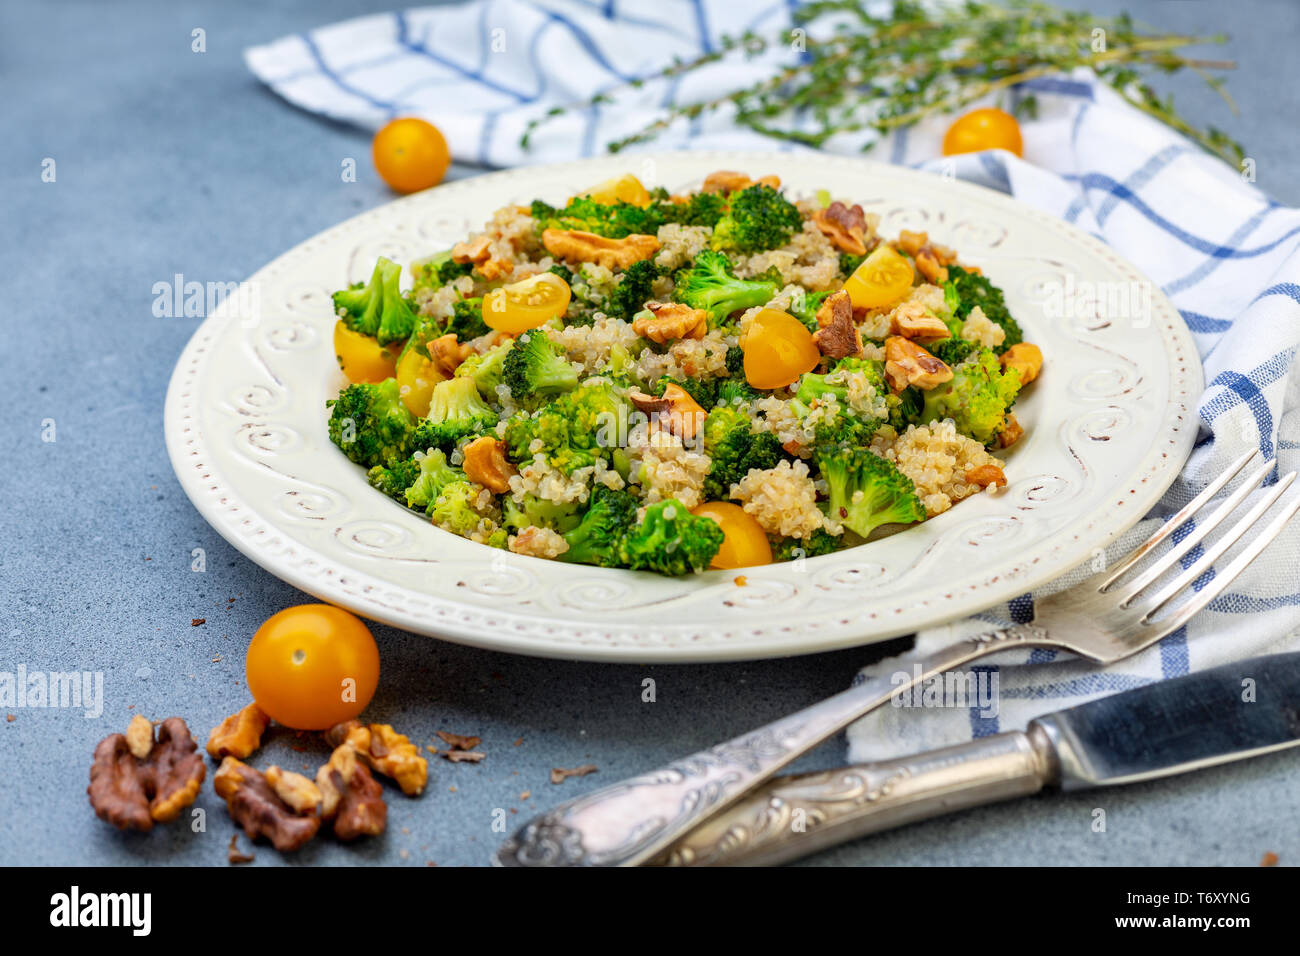 Broccoli salad and quinoa. Healthy diet. Stock Photo